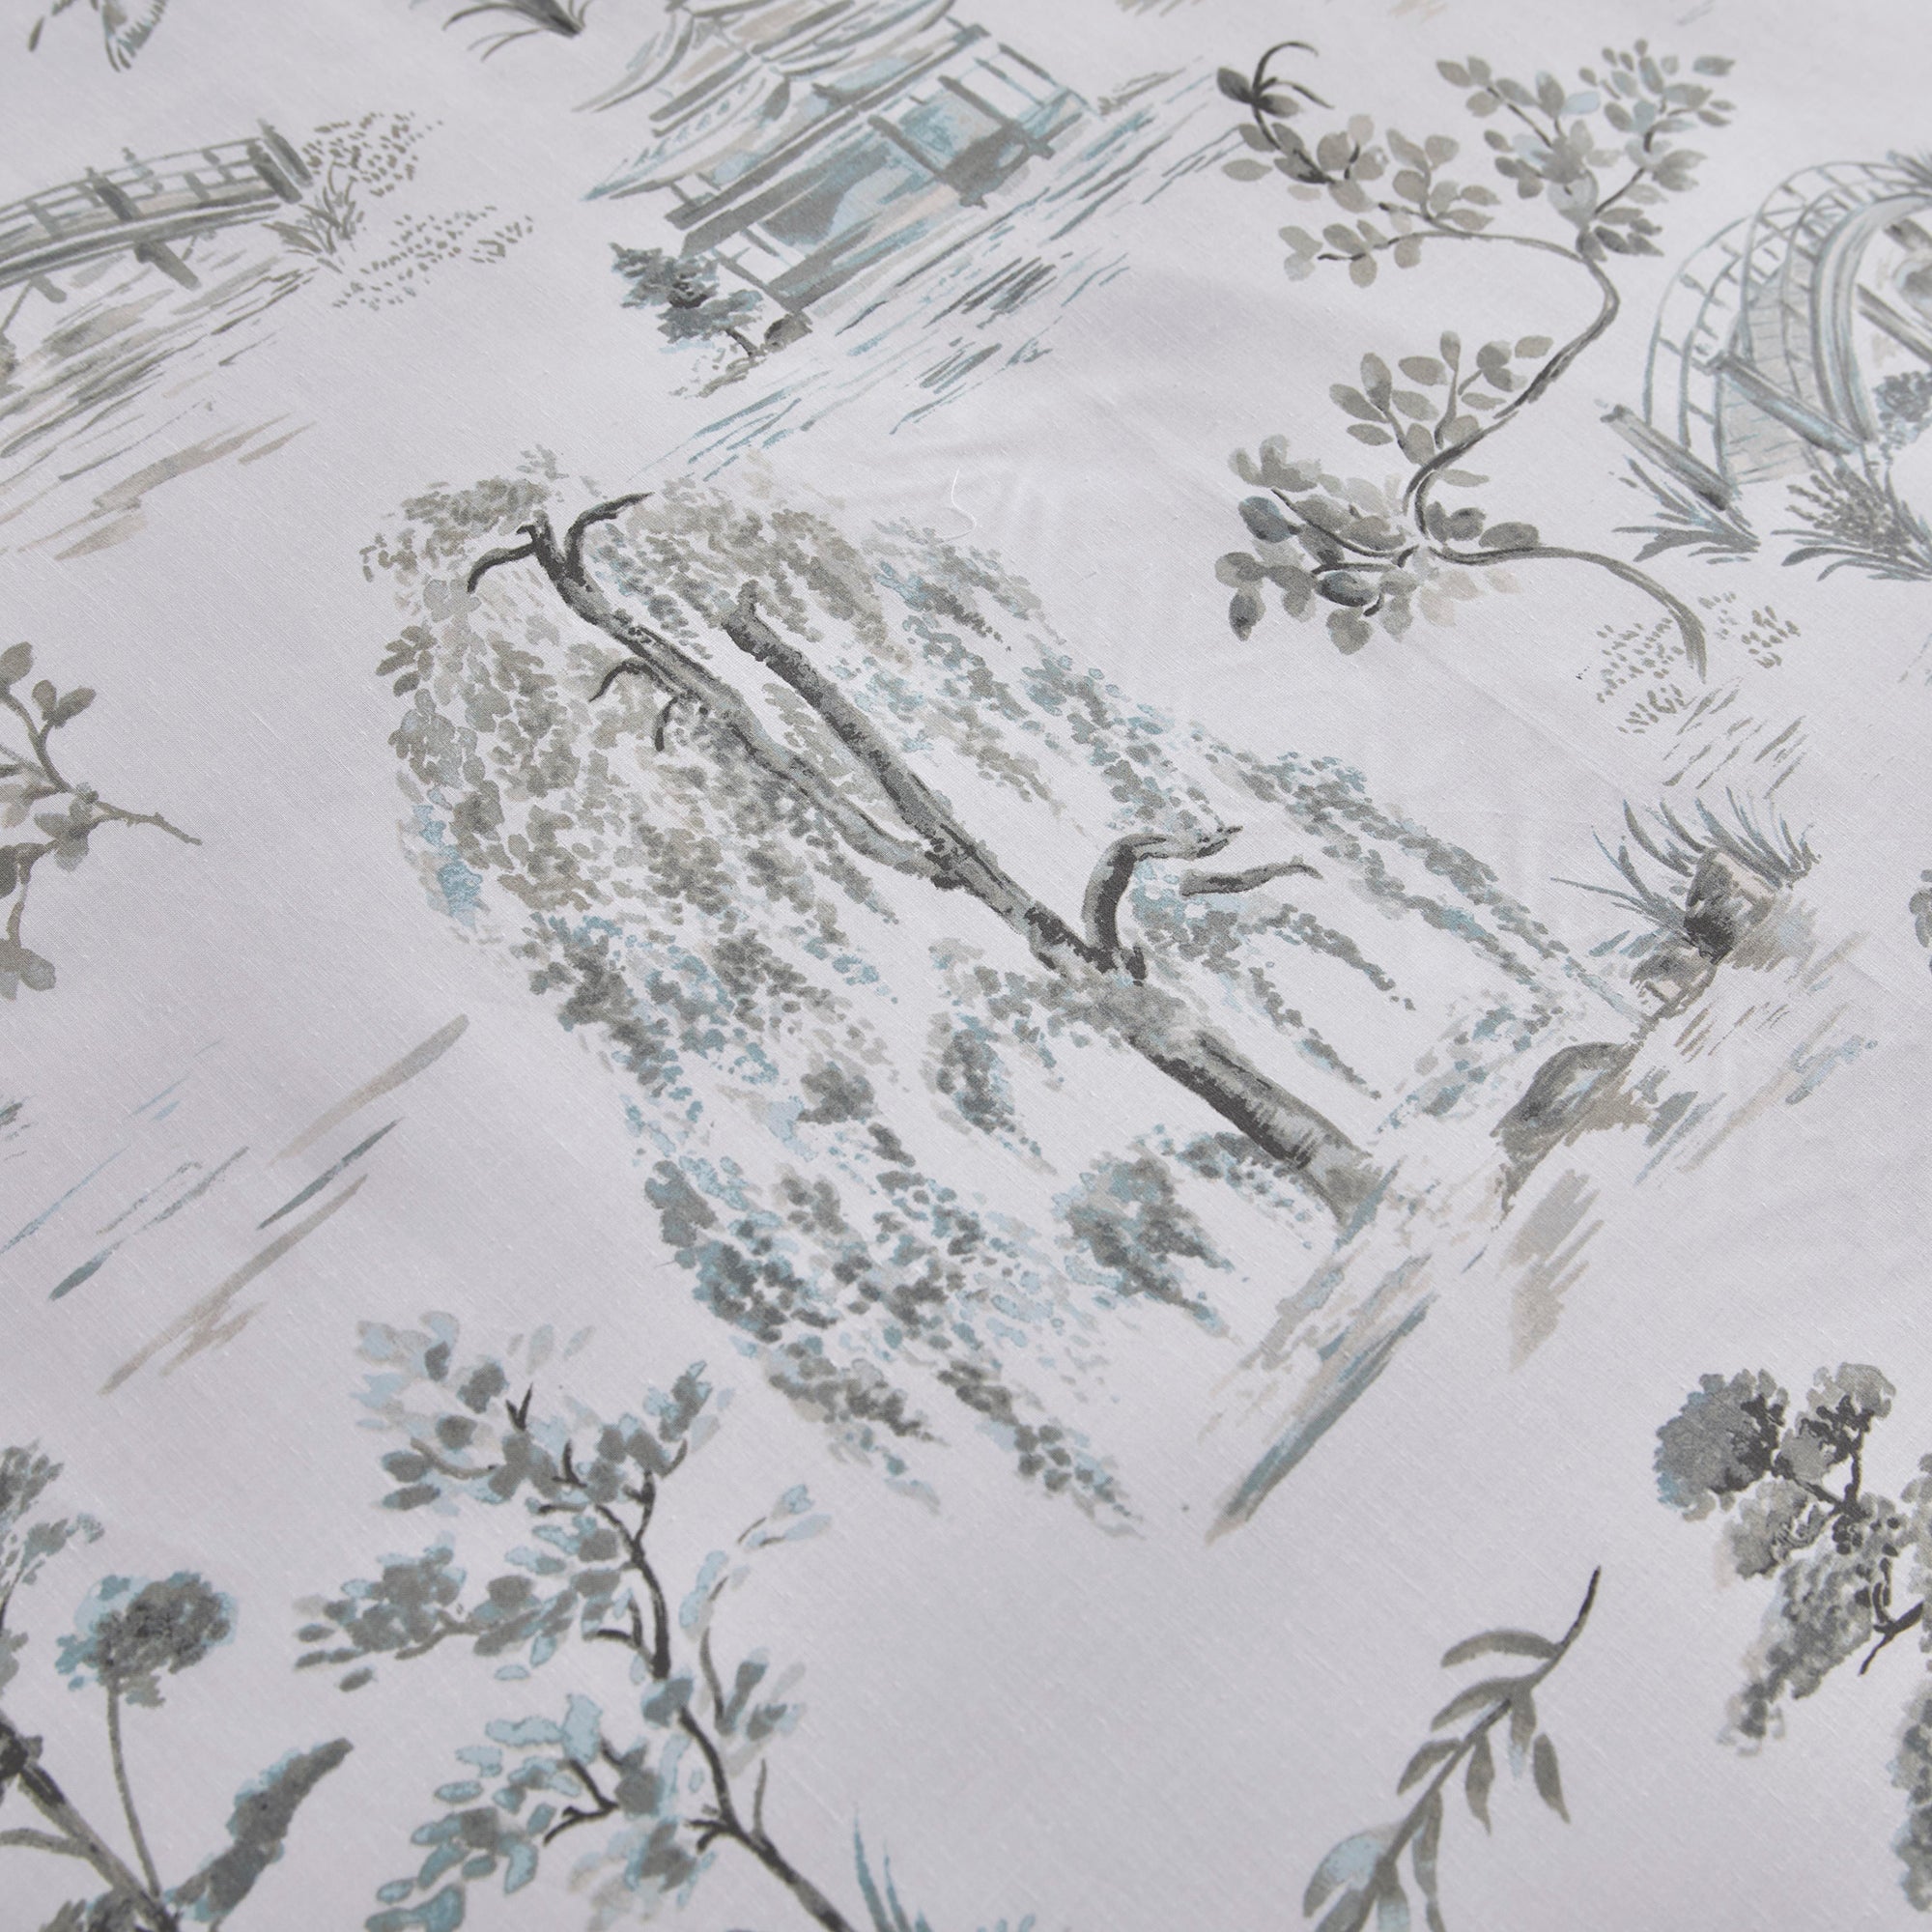 Duvet Cover Set Oriental Garden by D&D Design in Grey